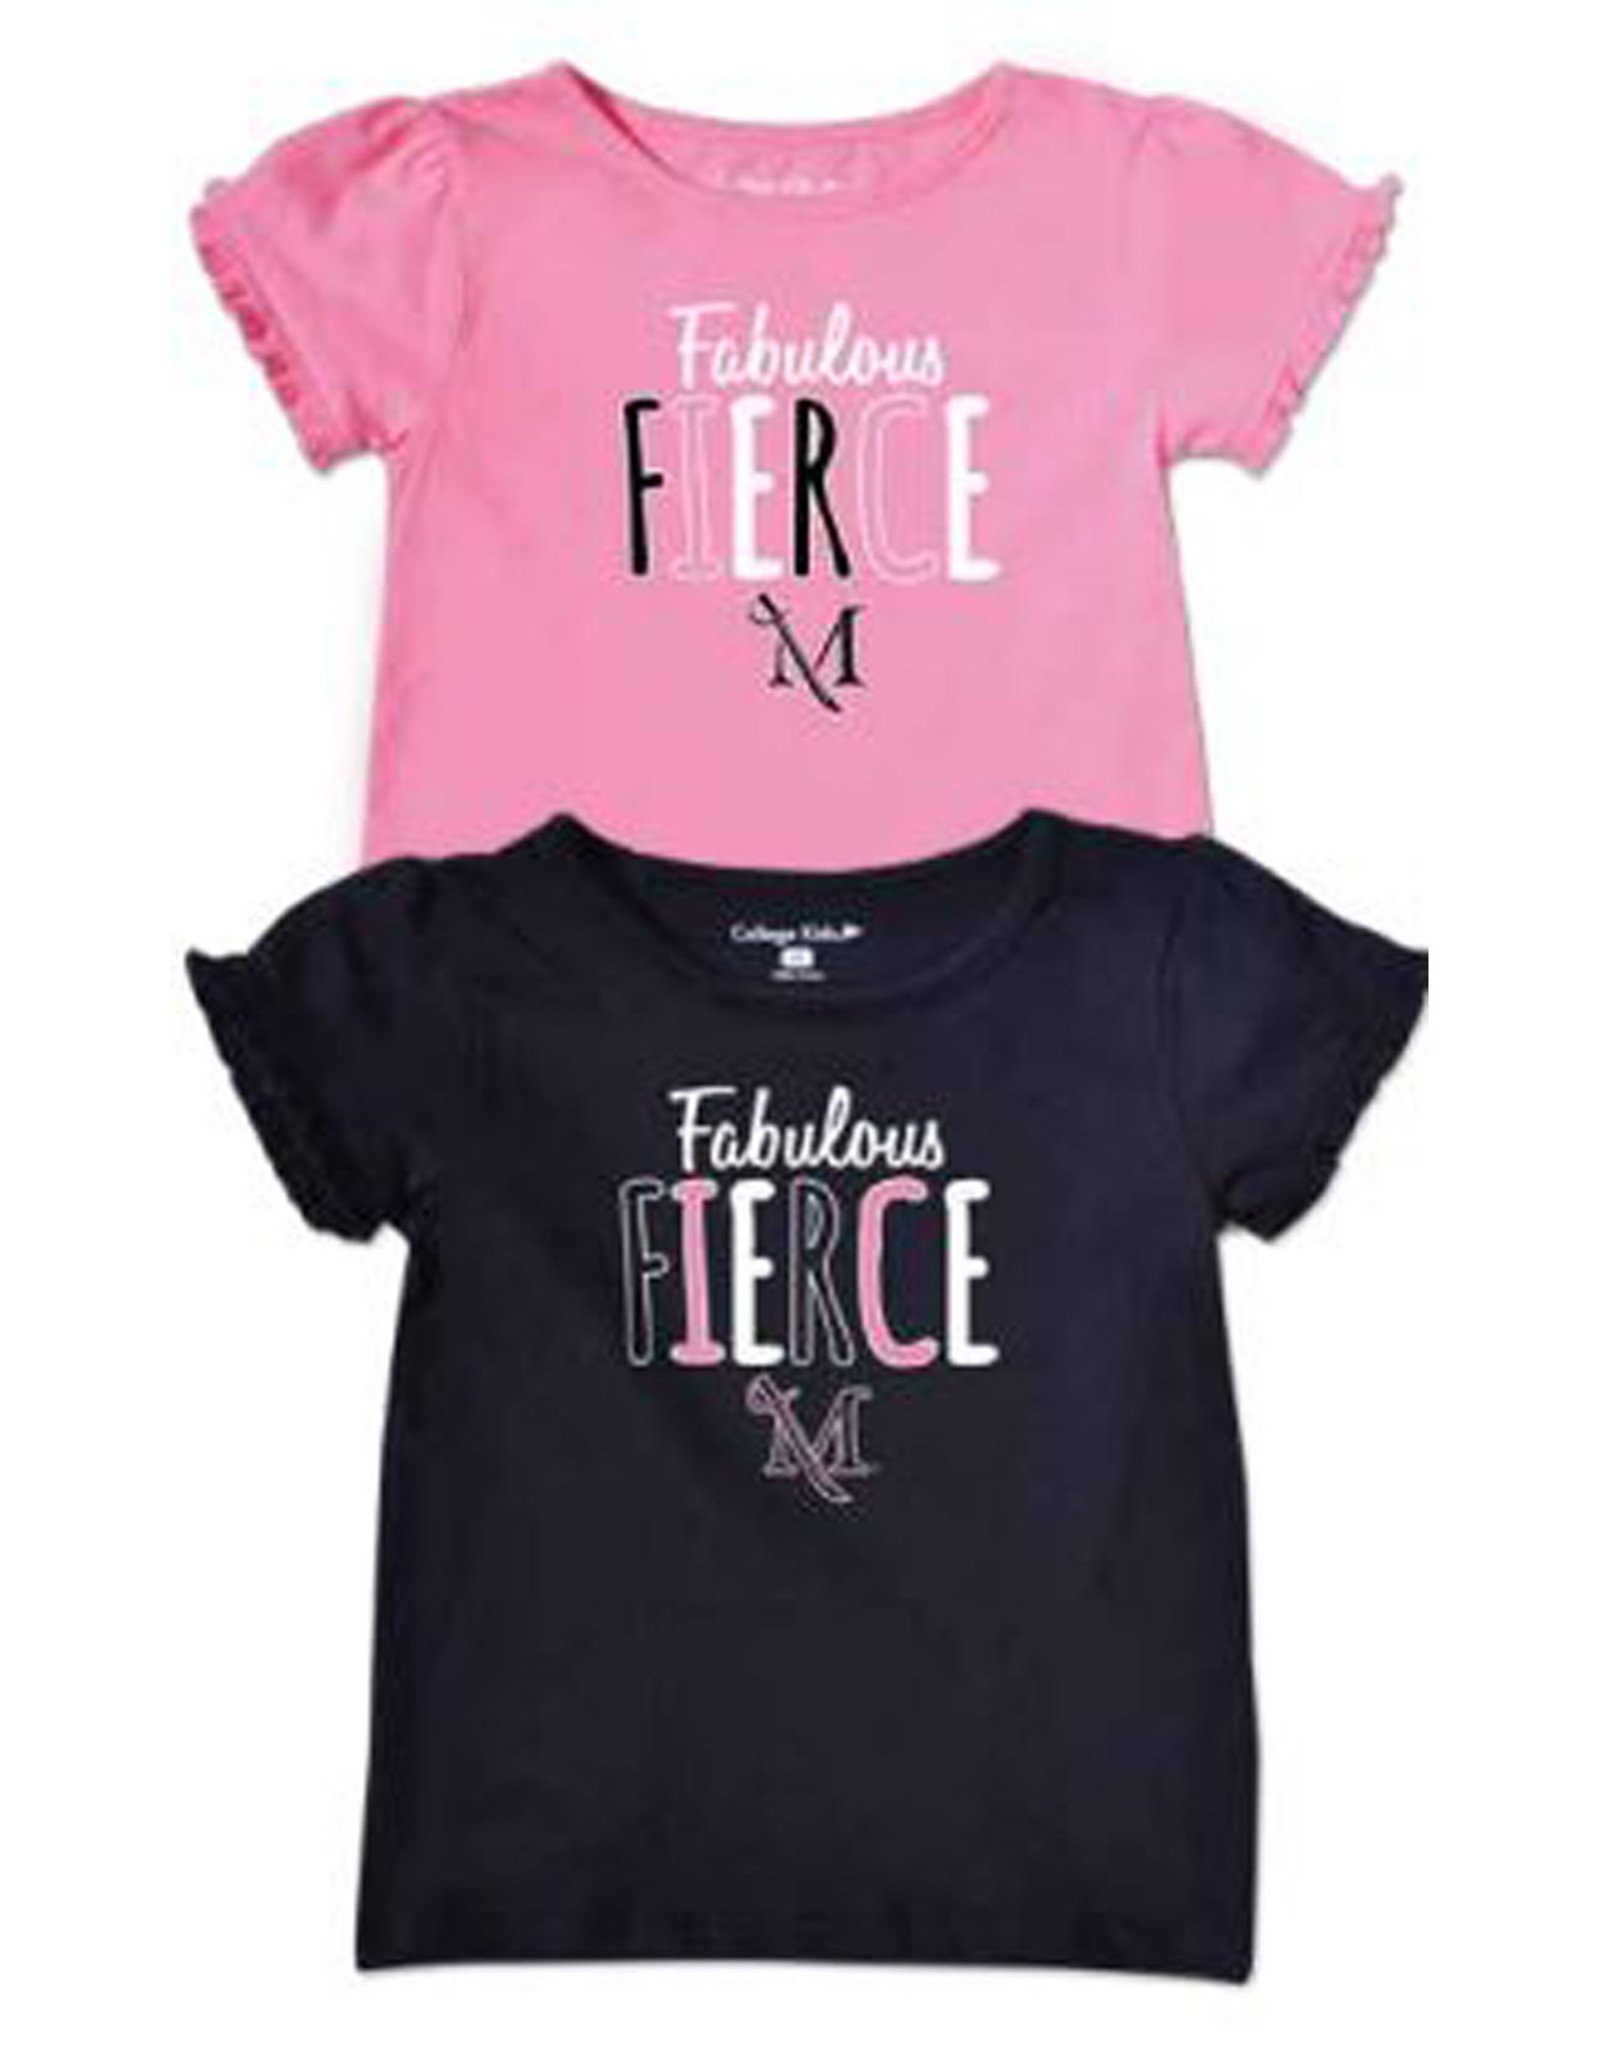 "Fabulous Fierce" Girls Ruffle Tee" - Sale!